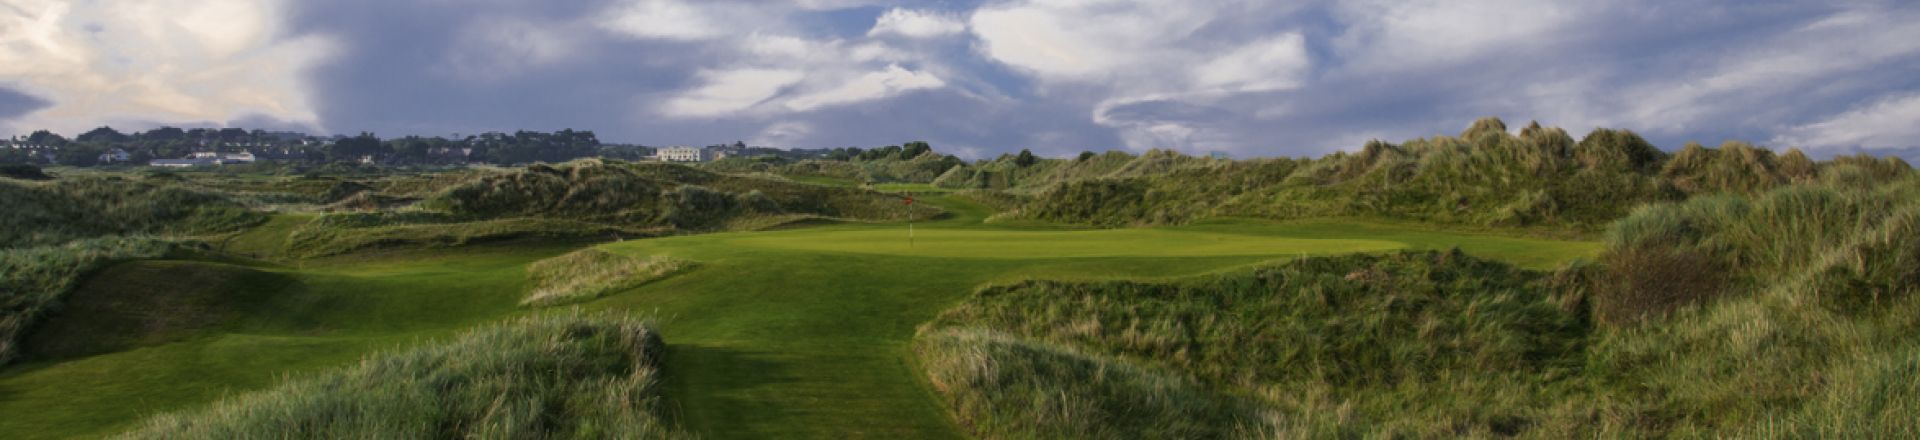 Play golf in Ireland at Jameson Golf Links